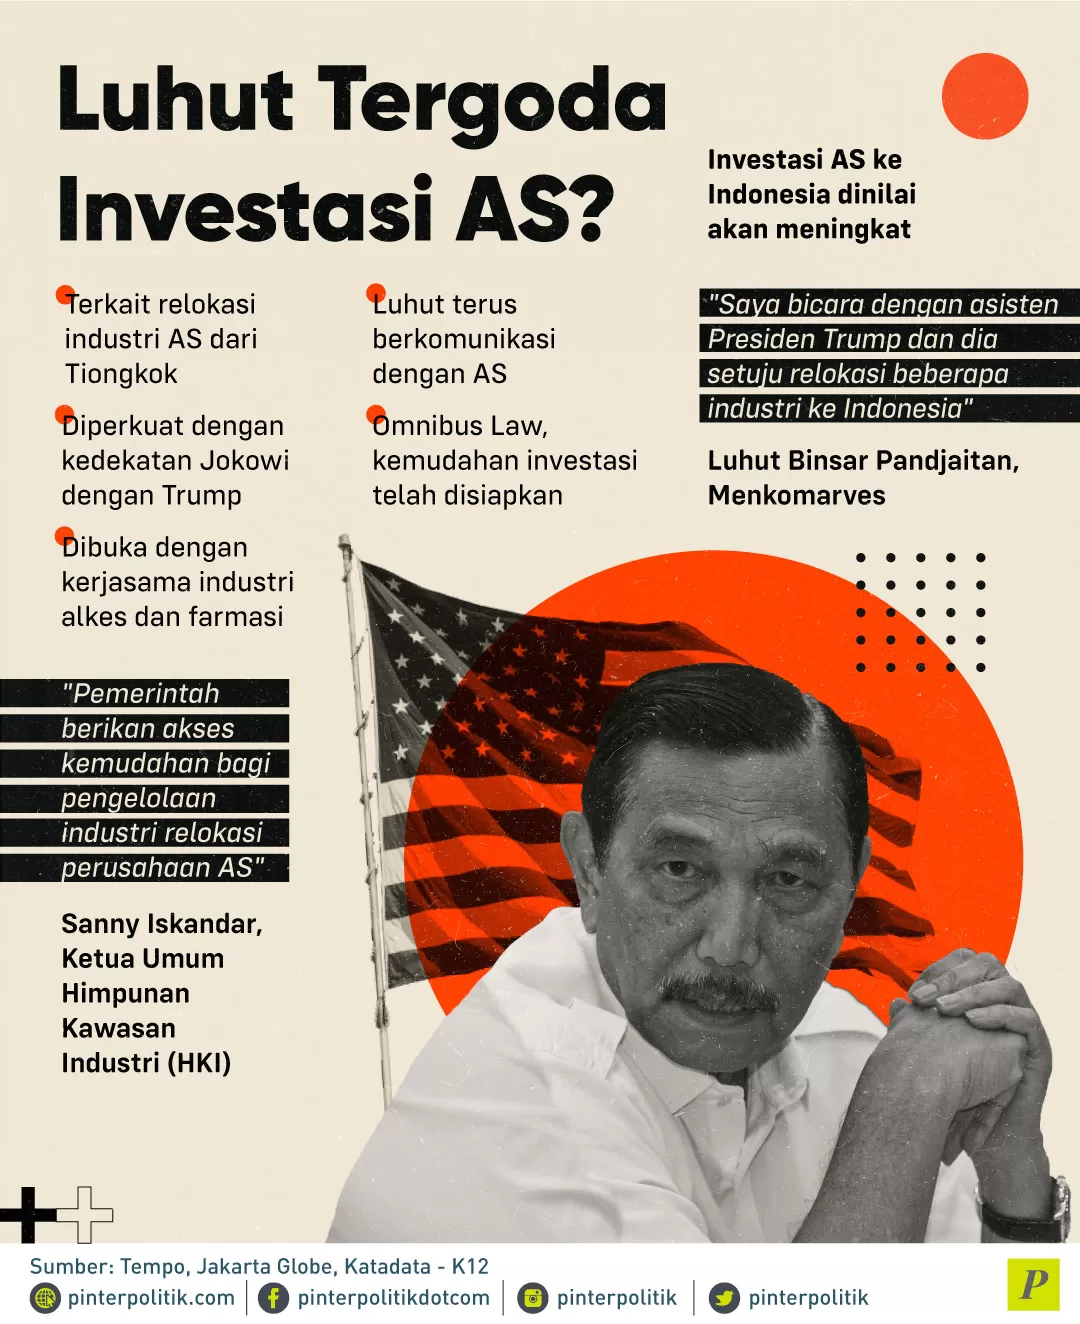 Investasi AS ke Indonesia